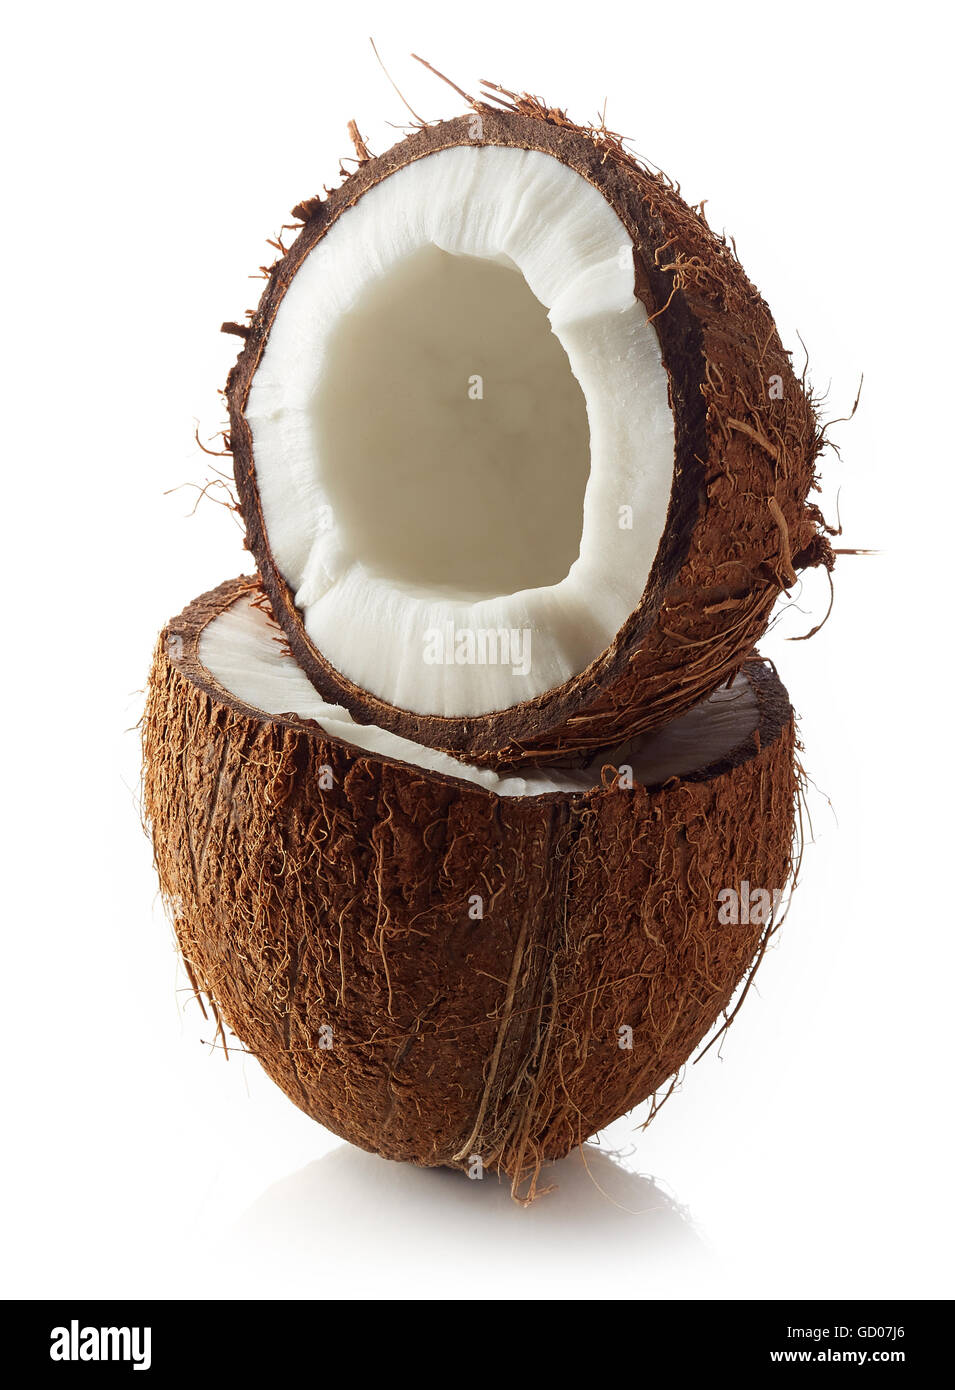 Coconut halves isolated on white background Stock Photo